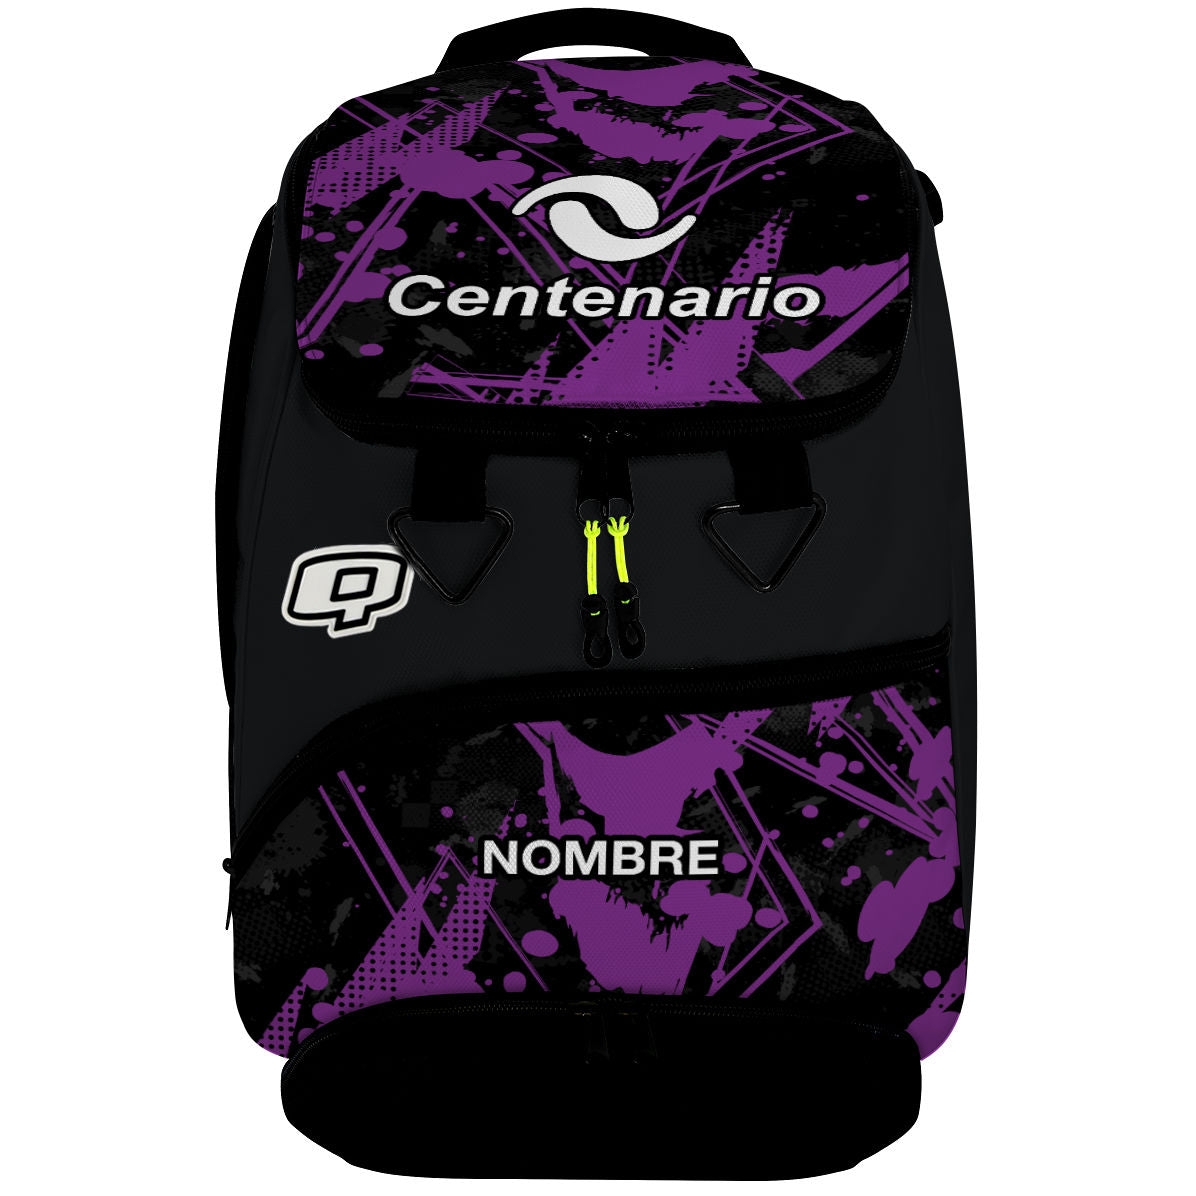 Centenario - Back Pack